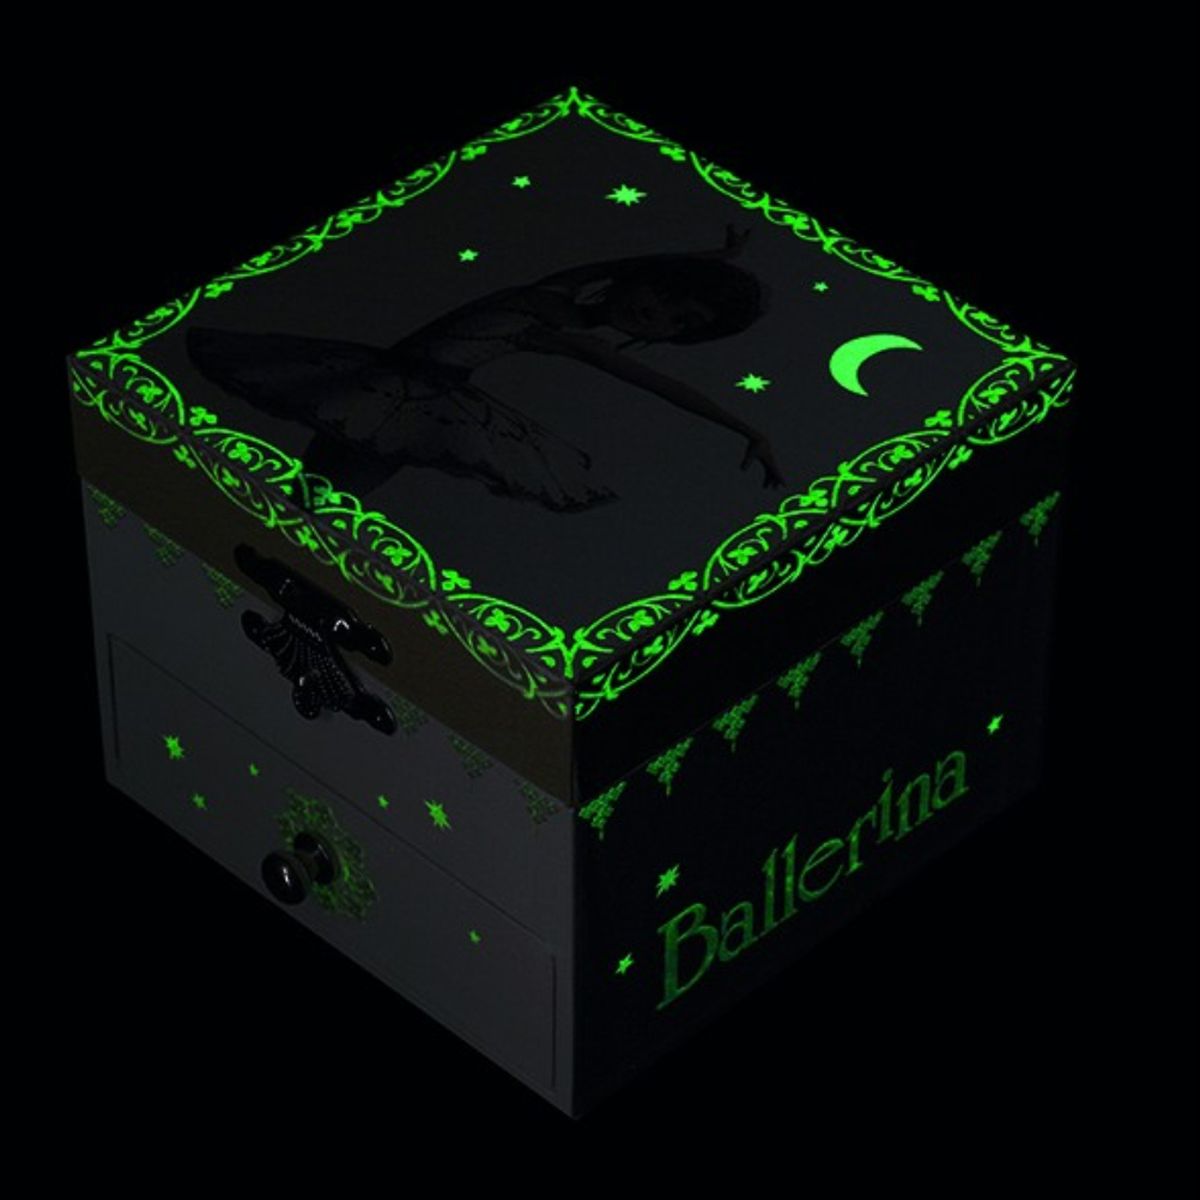 Ballerina Musical Jewelry Box - Glow in the Dark